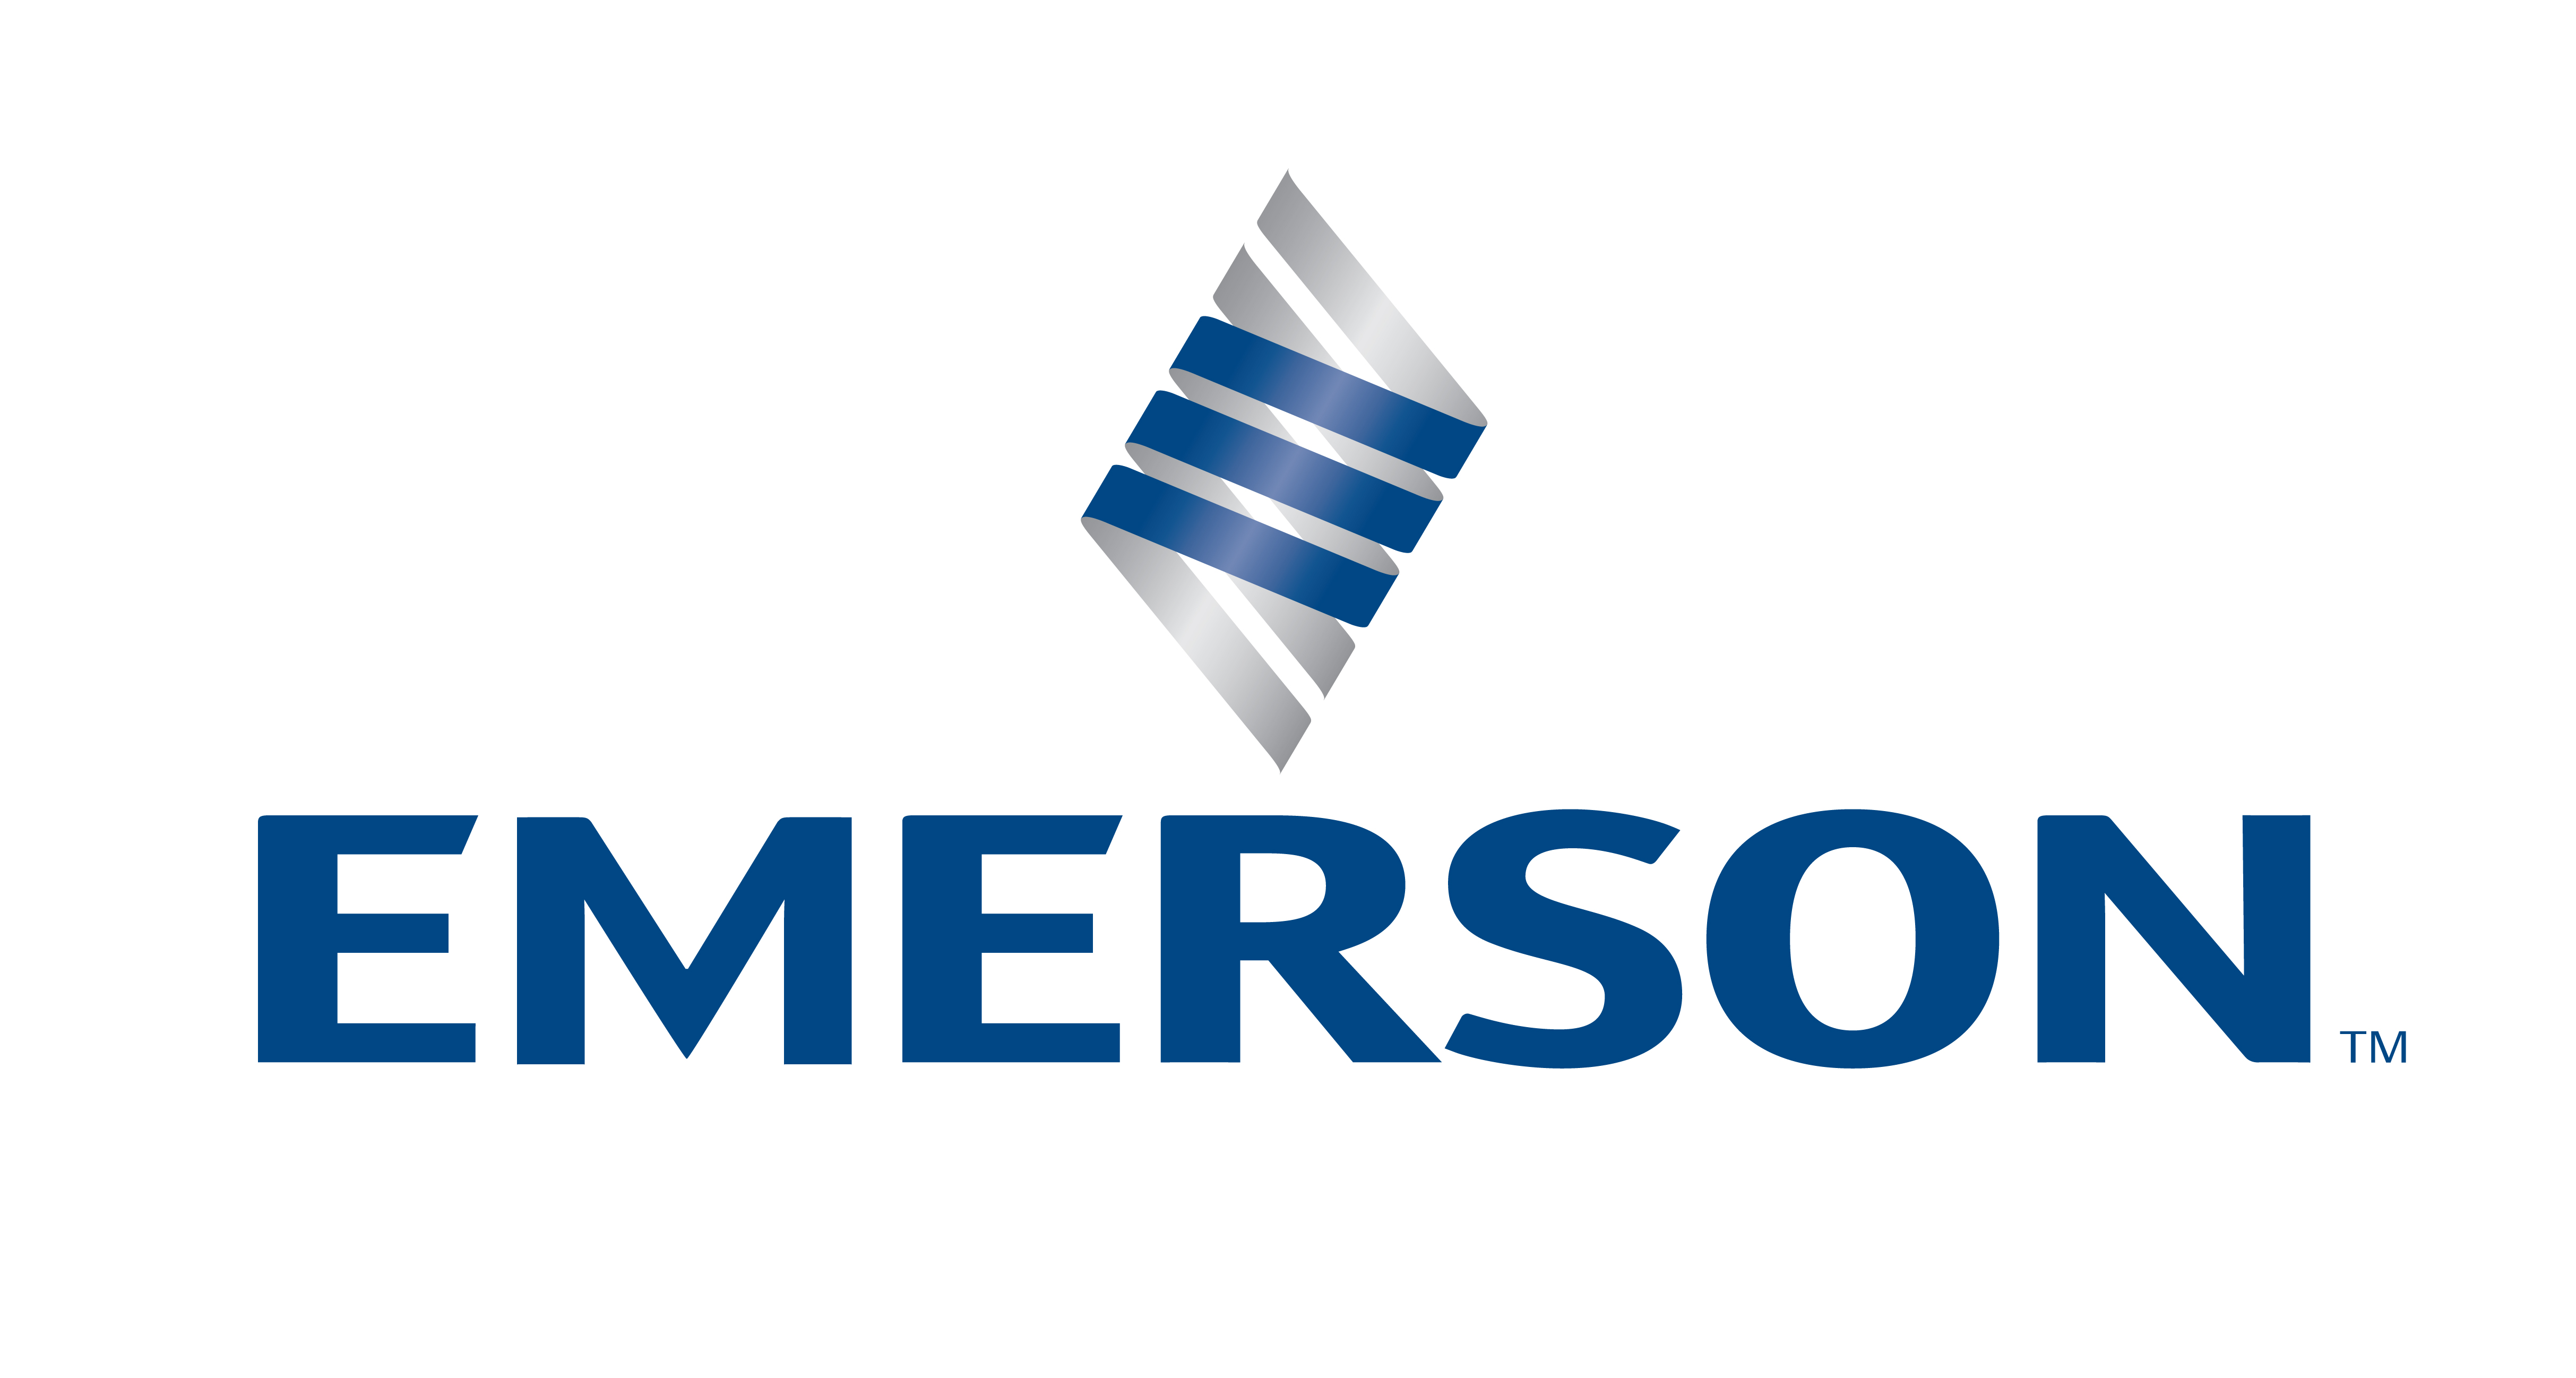 Logo Emerson